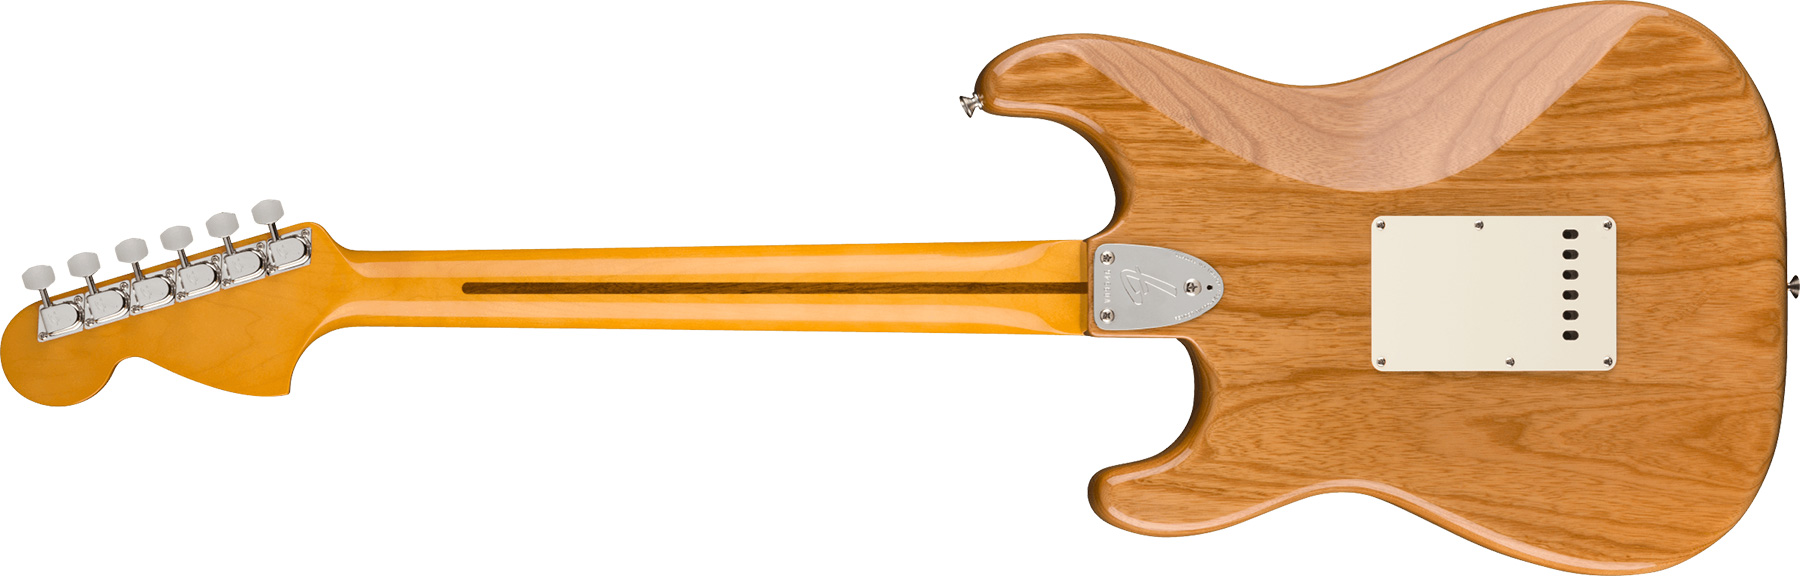 Fender Strat 1973 American Vintage Ii Usa 3s Trem Rw - Aged Natural - Elektrische gitaar in Str-vorm - Variation 1